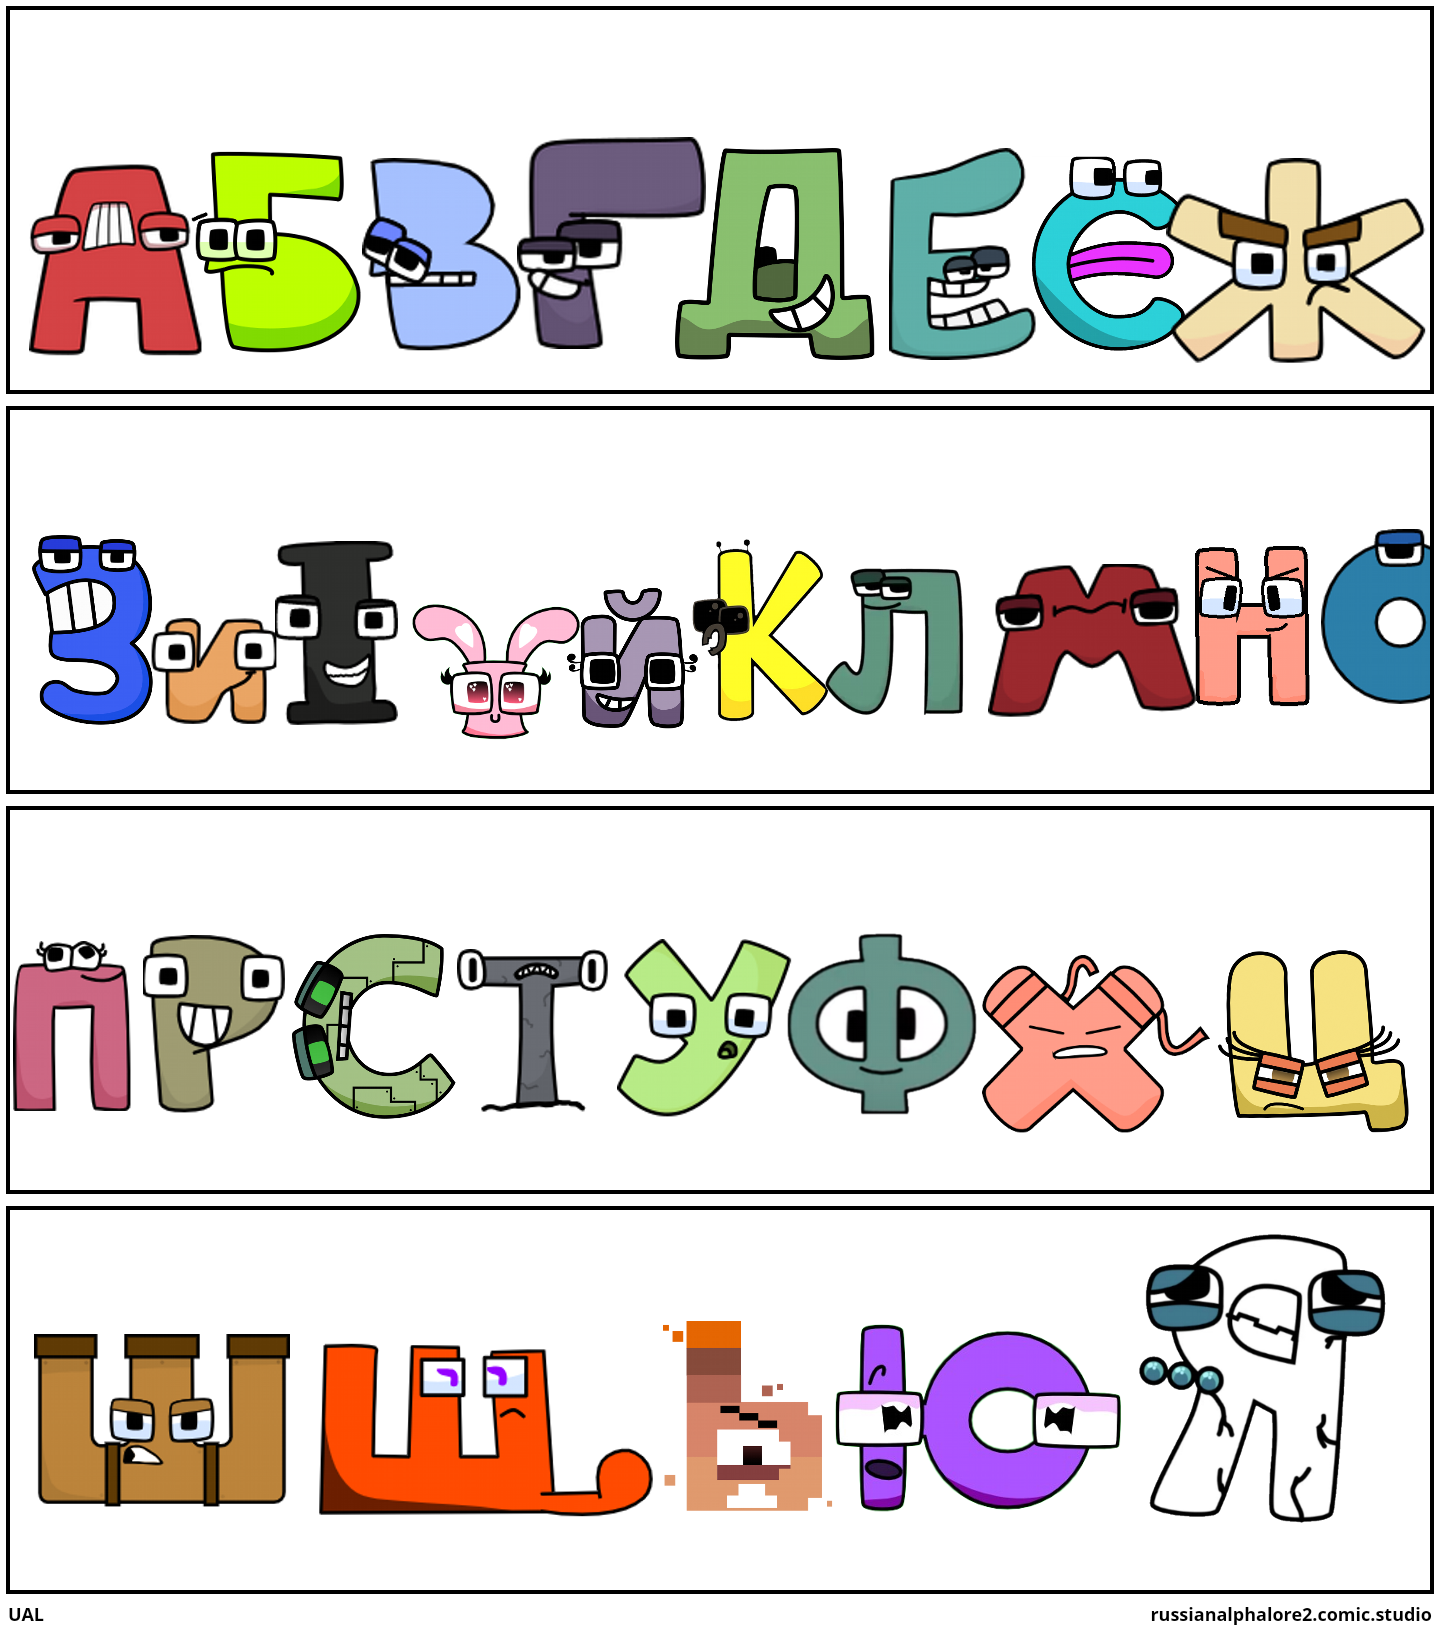 russian alphabet lore:Б